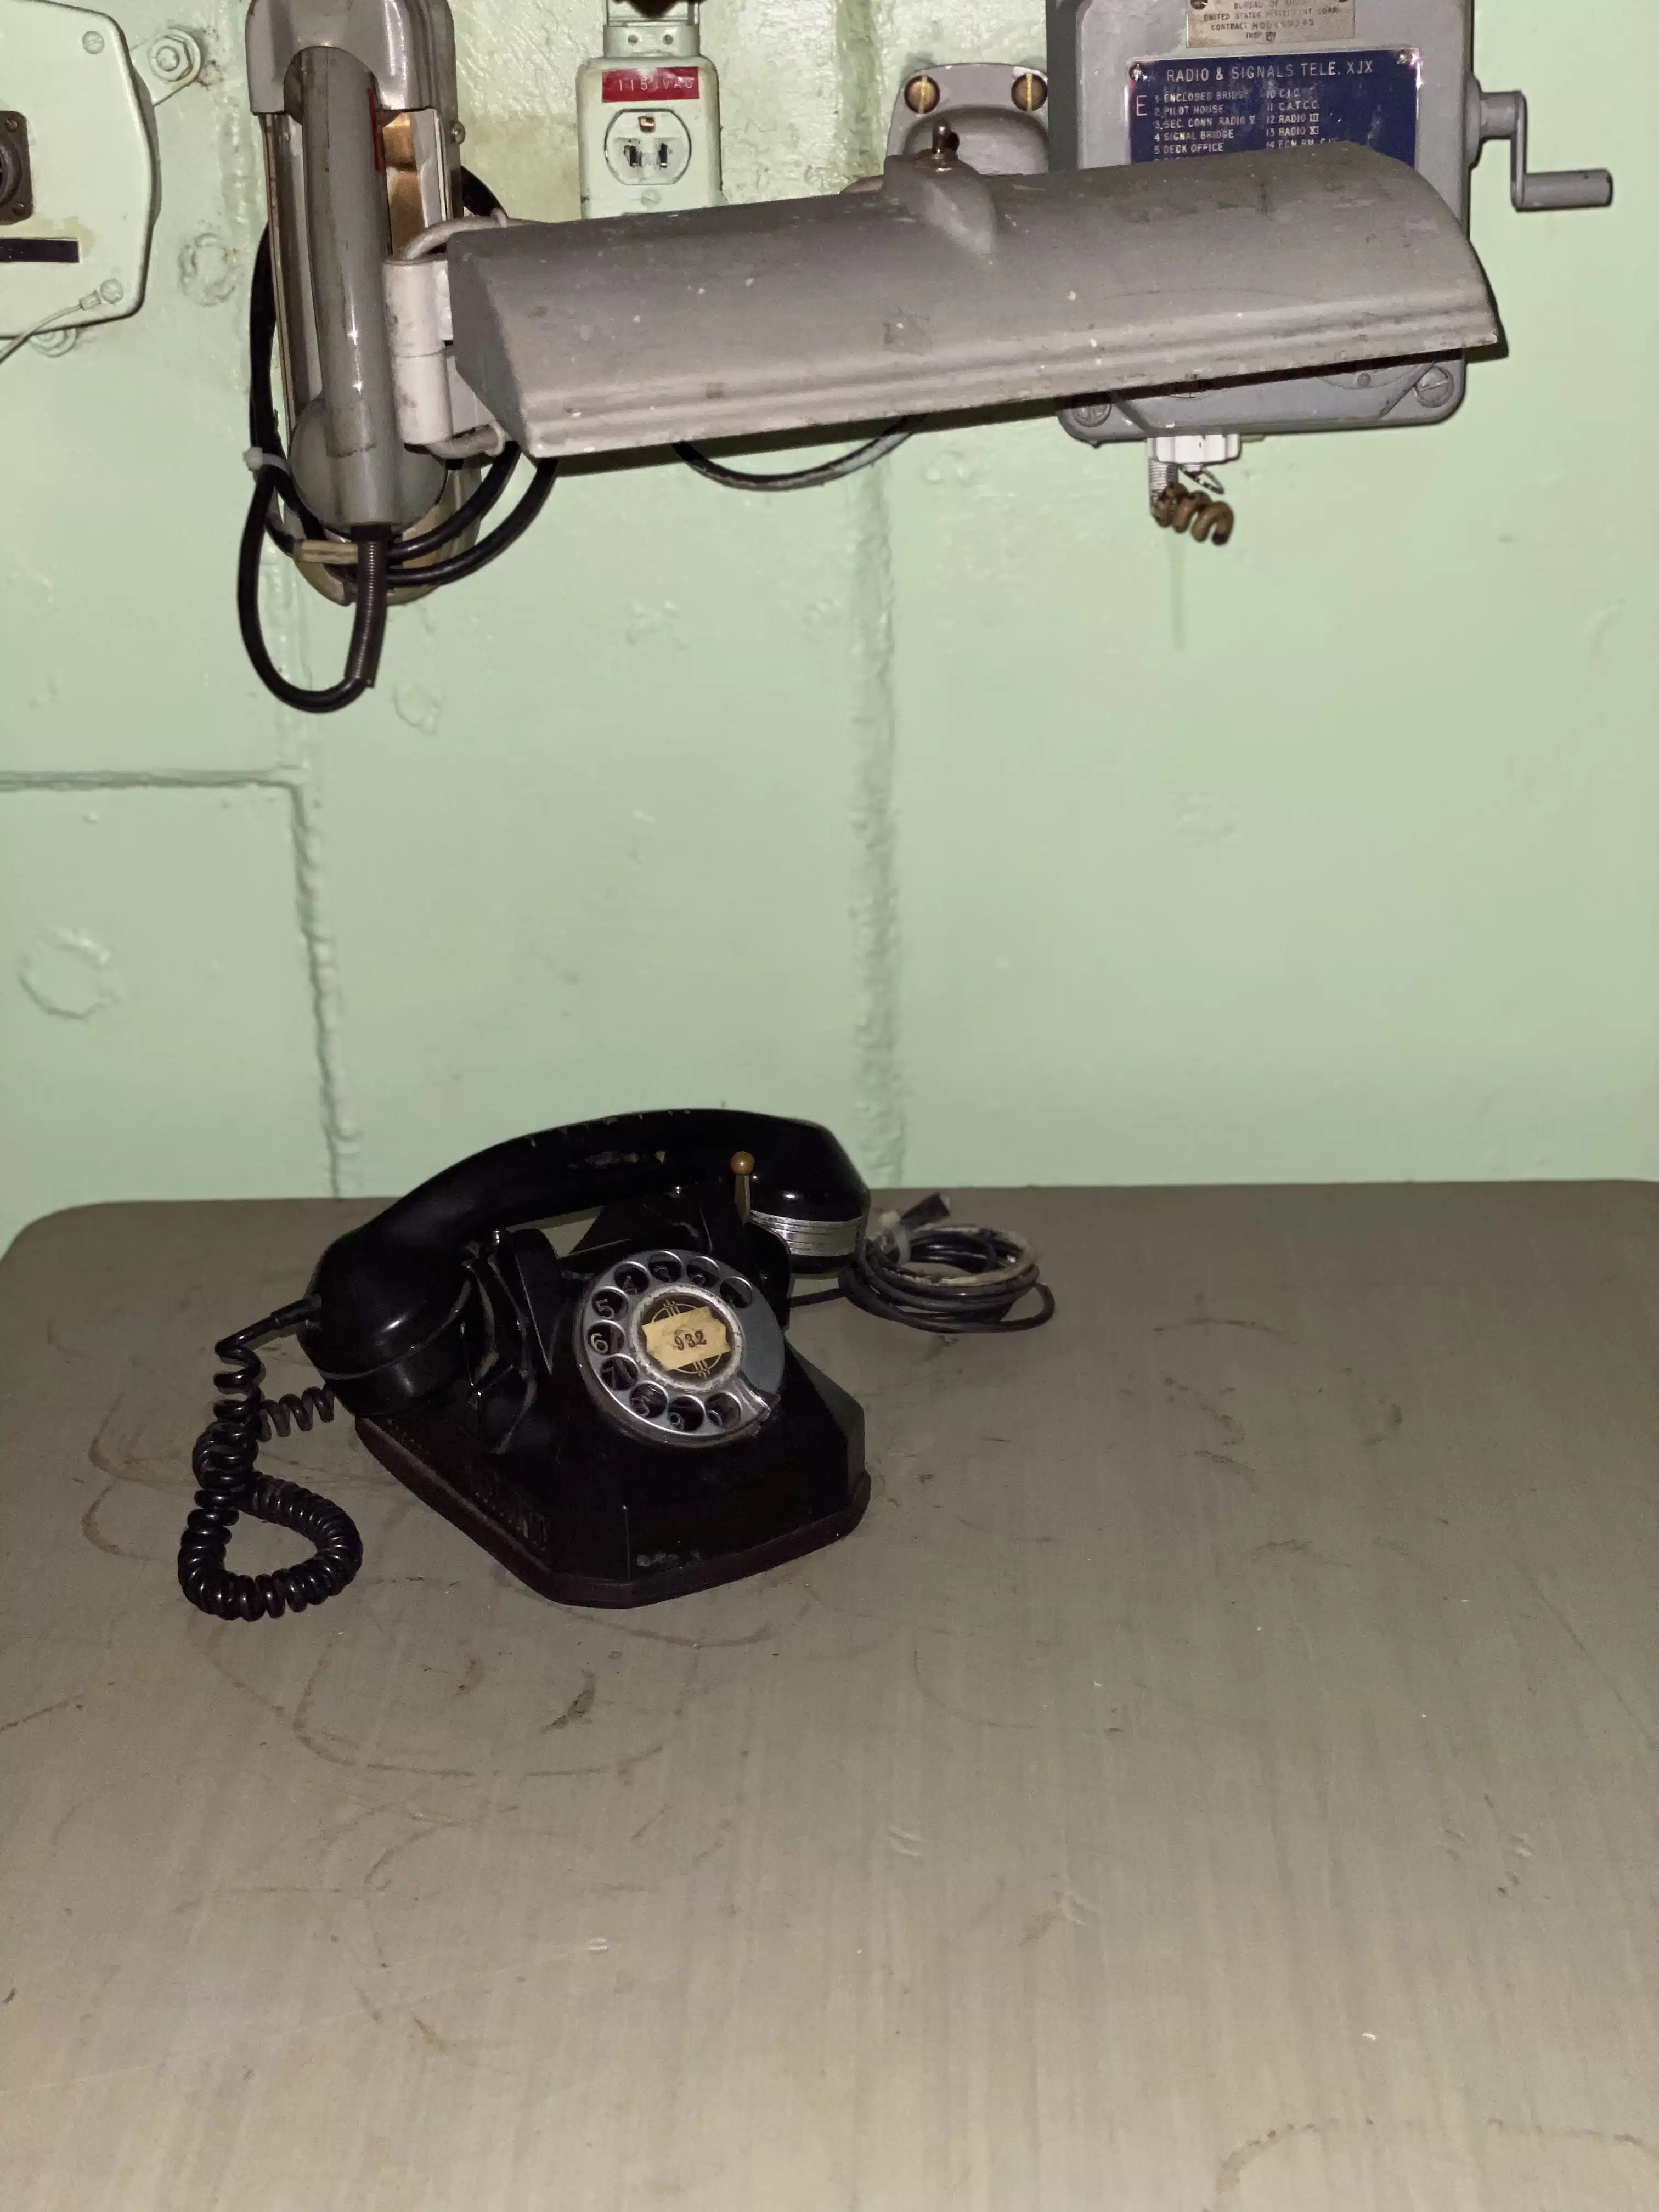 Aboard the hornet - secret room phone